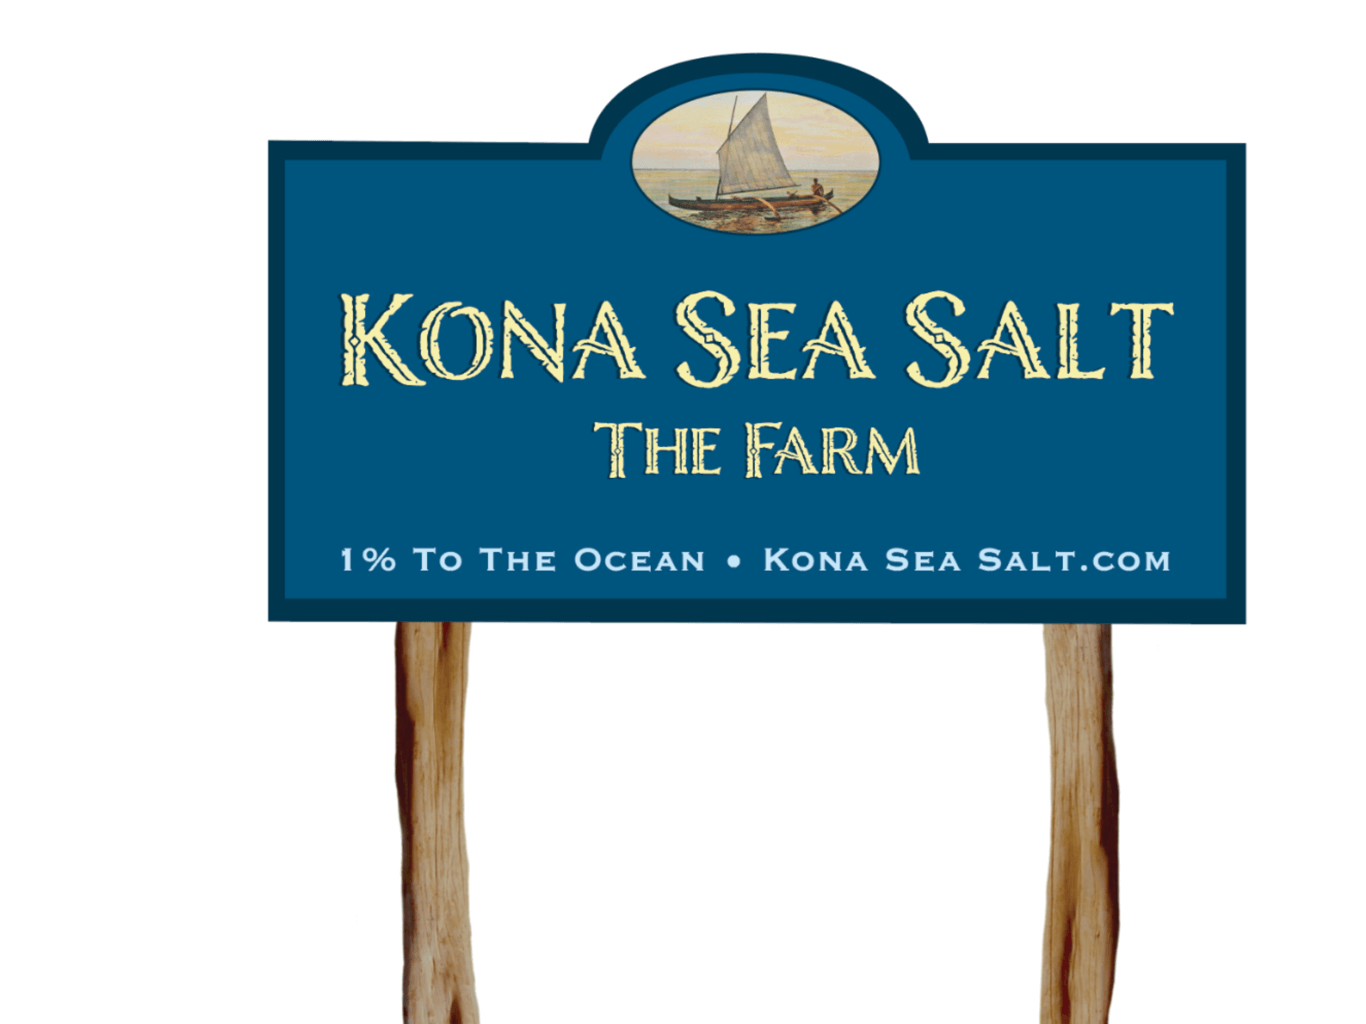 Kona-Sea-Salt The Farm